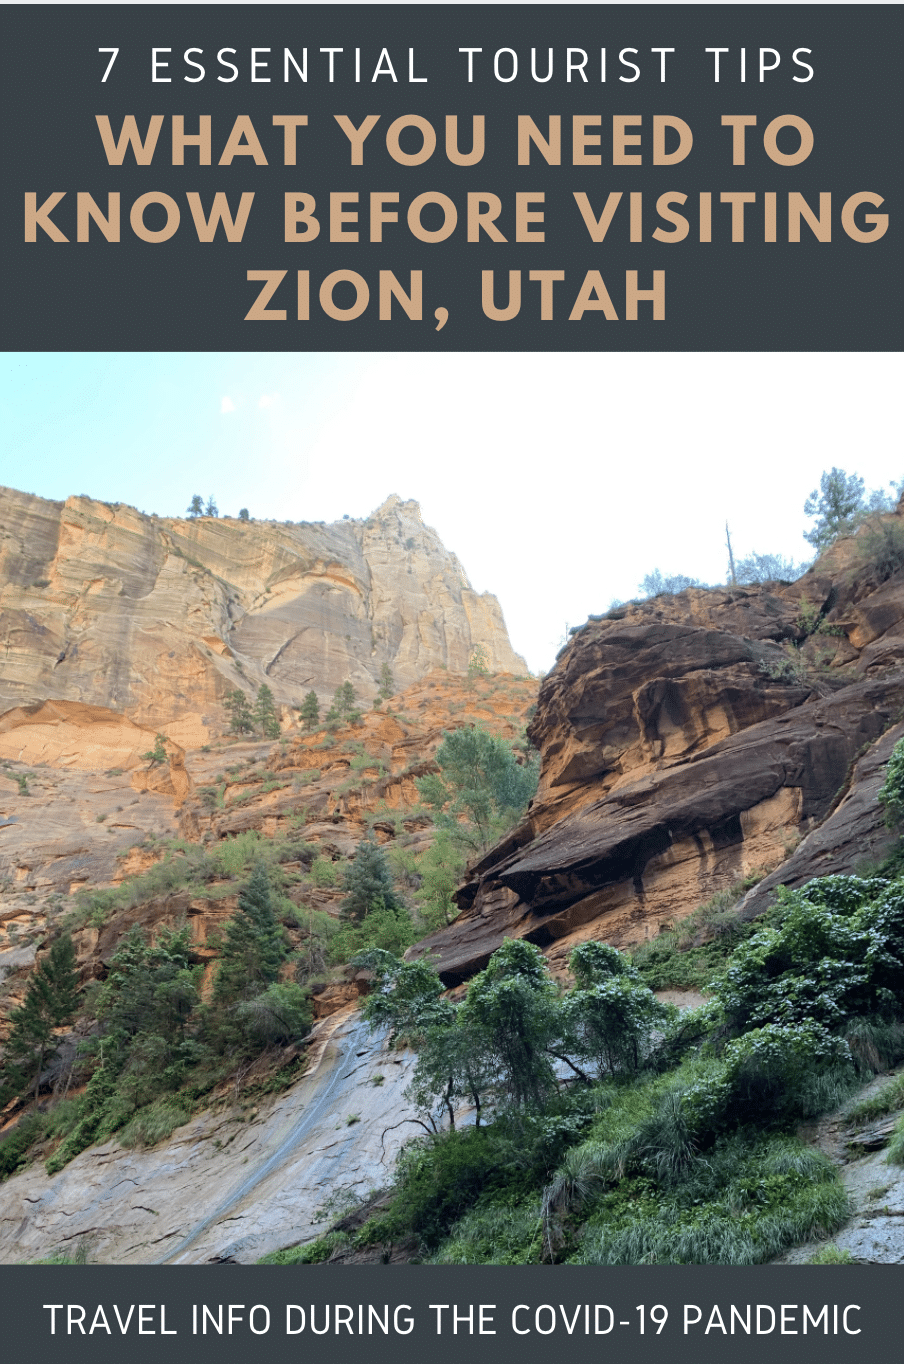 Essential tourist tips for Zion Utah